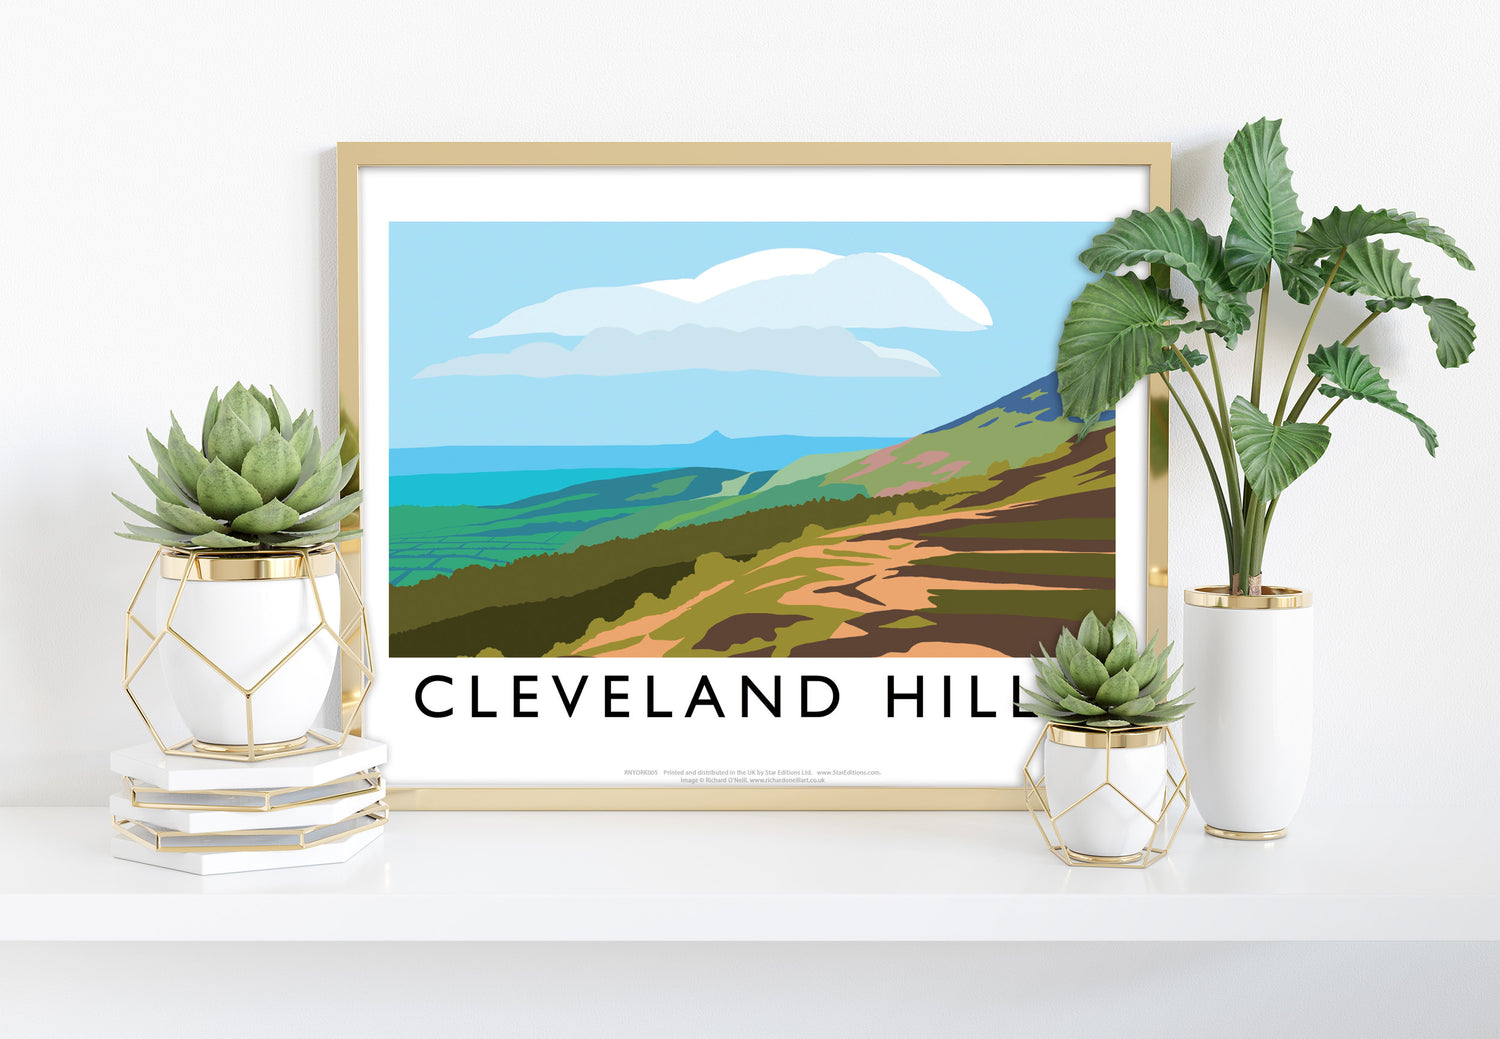 The Cleveland Hills, Yorkshire - Art Print